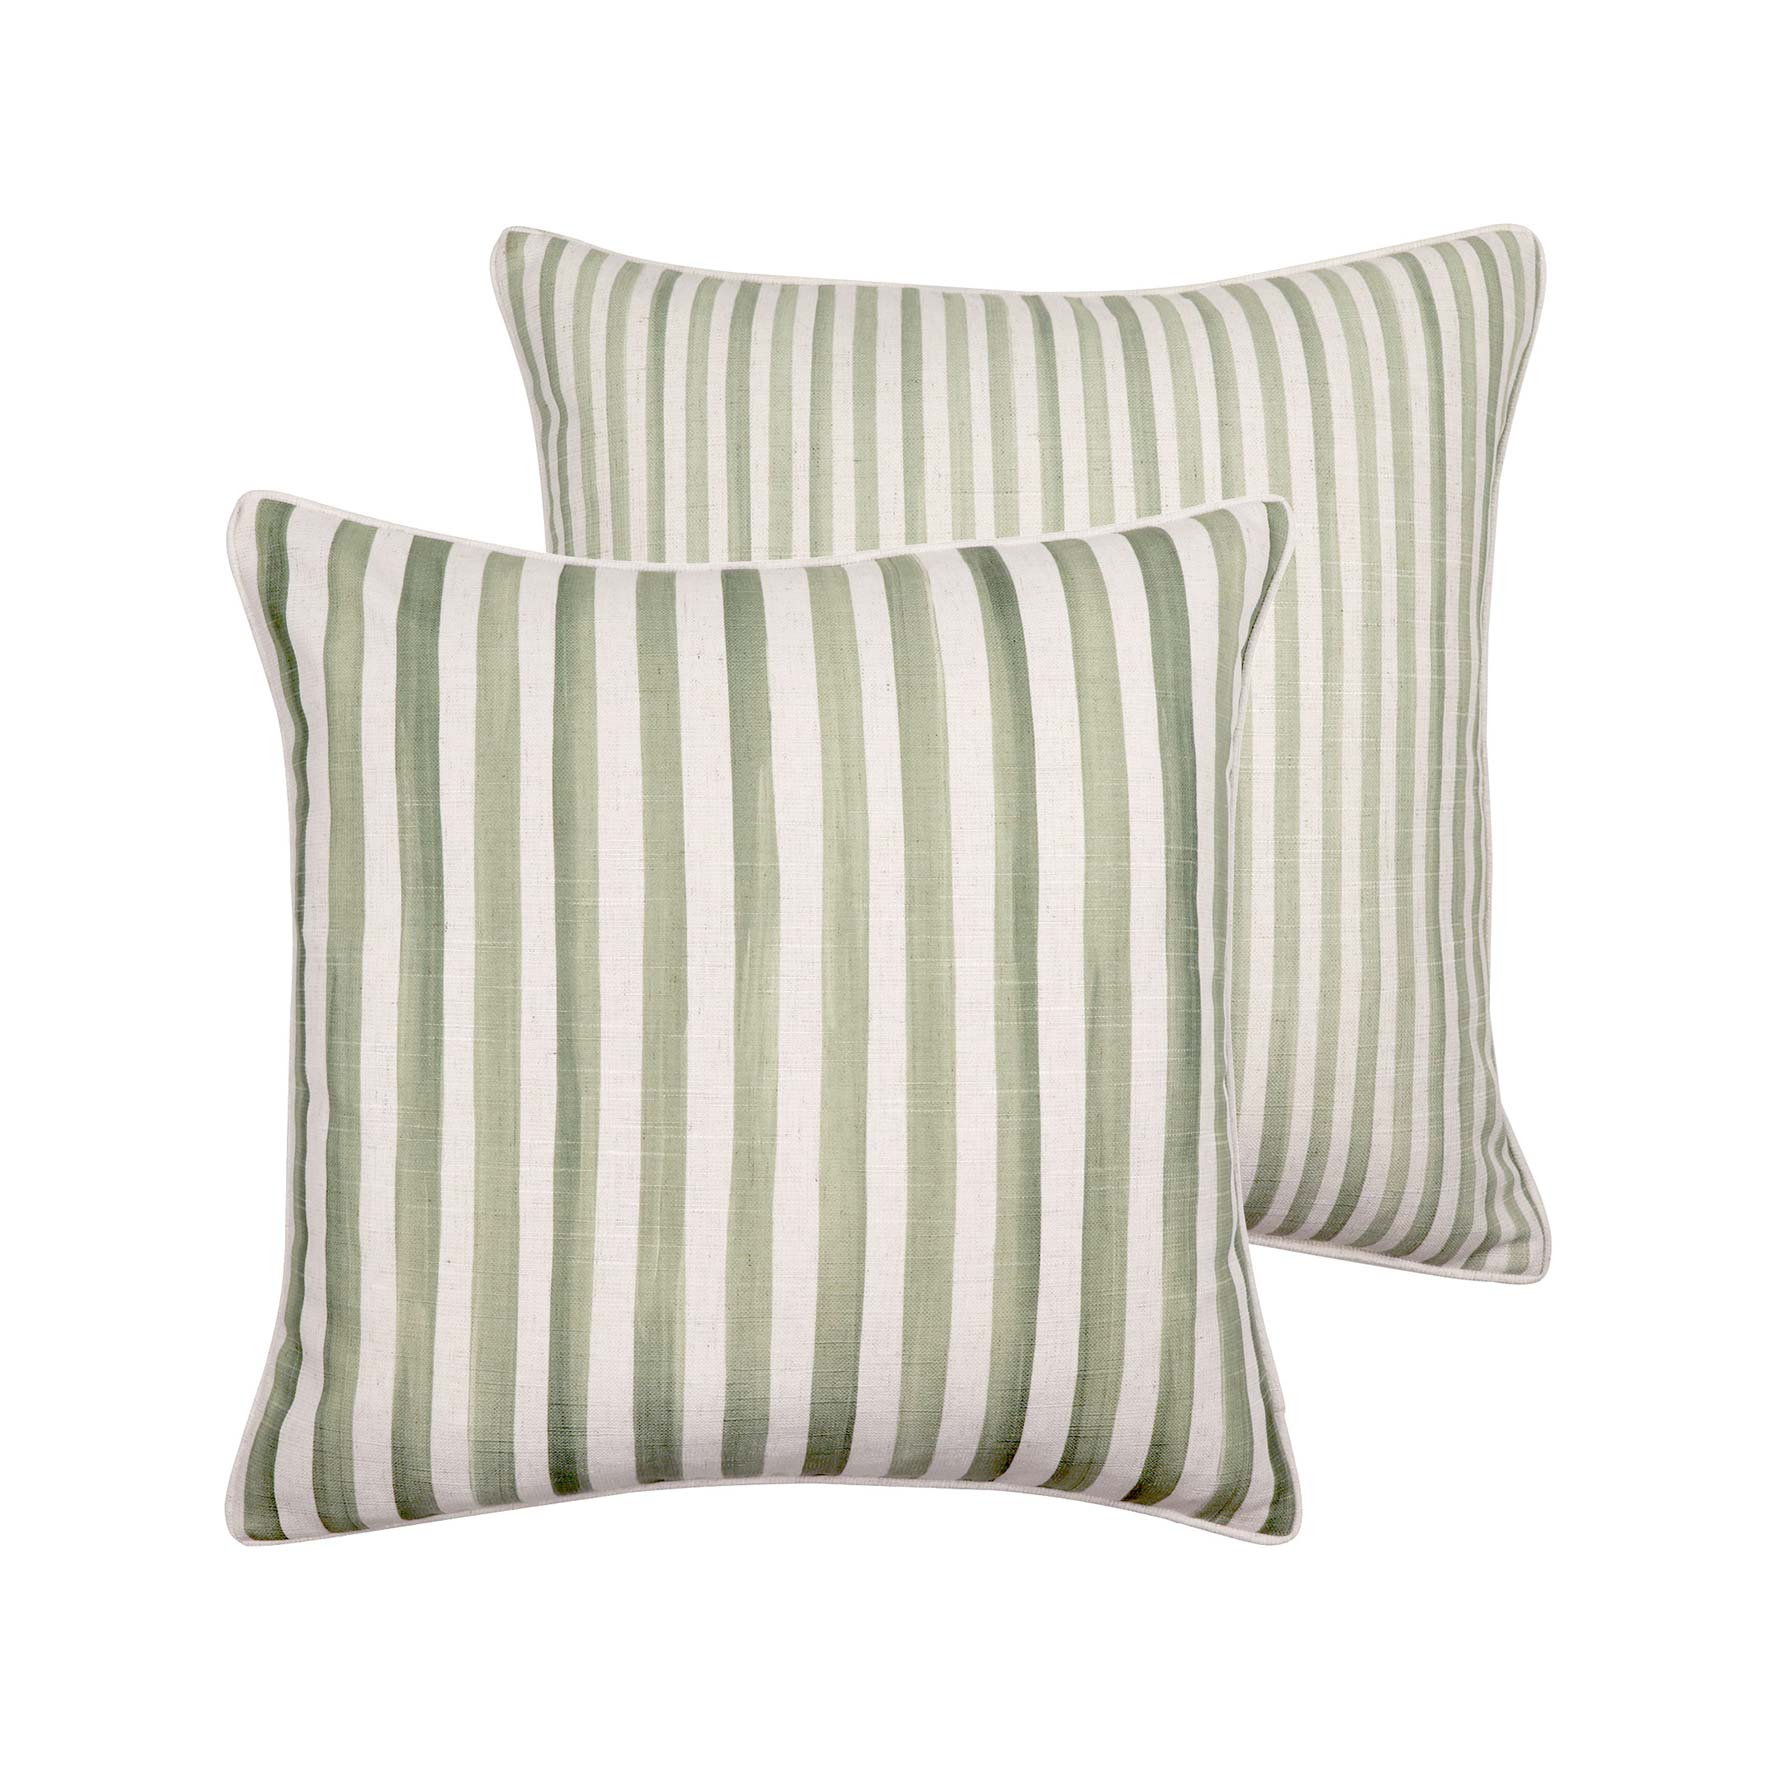 Taylor Green Painted Stripe Cushion 55x55cm-Soft Furnishings-Madras Link-The Bay Room